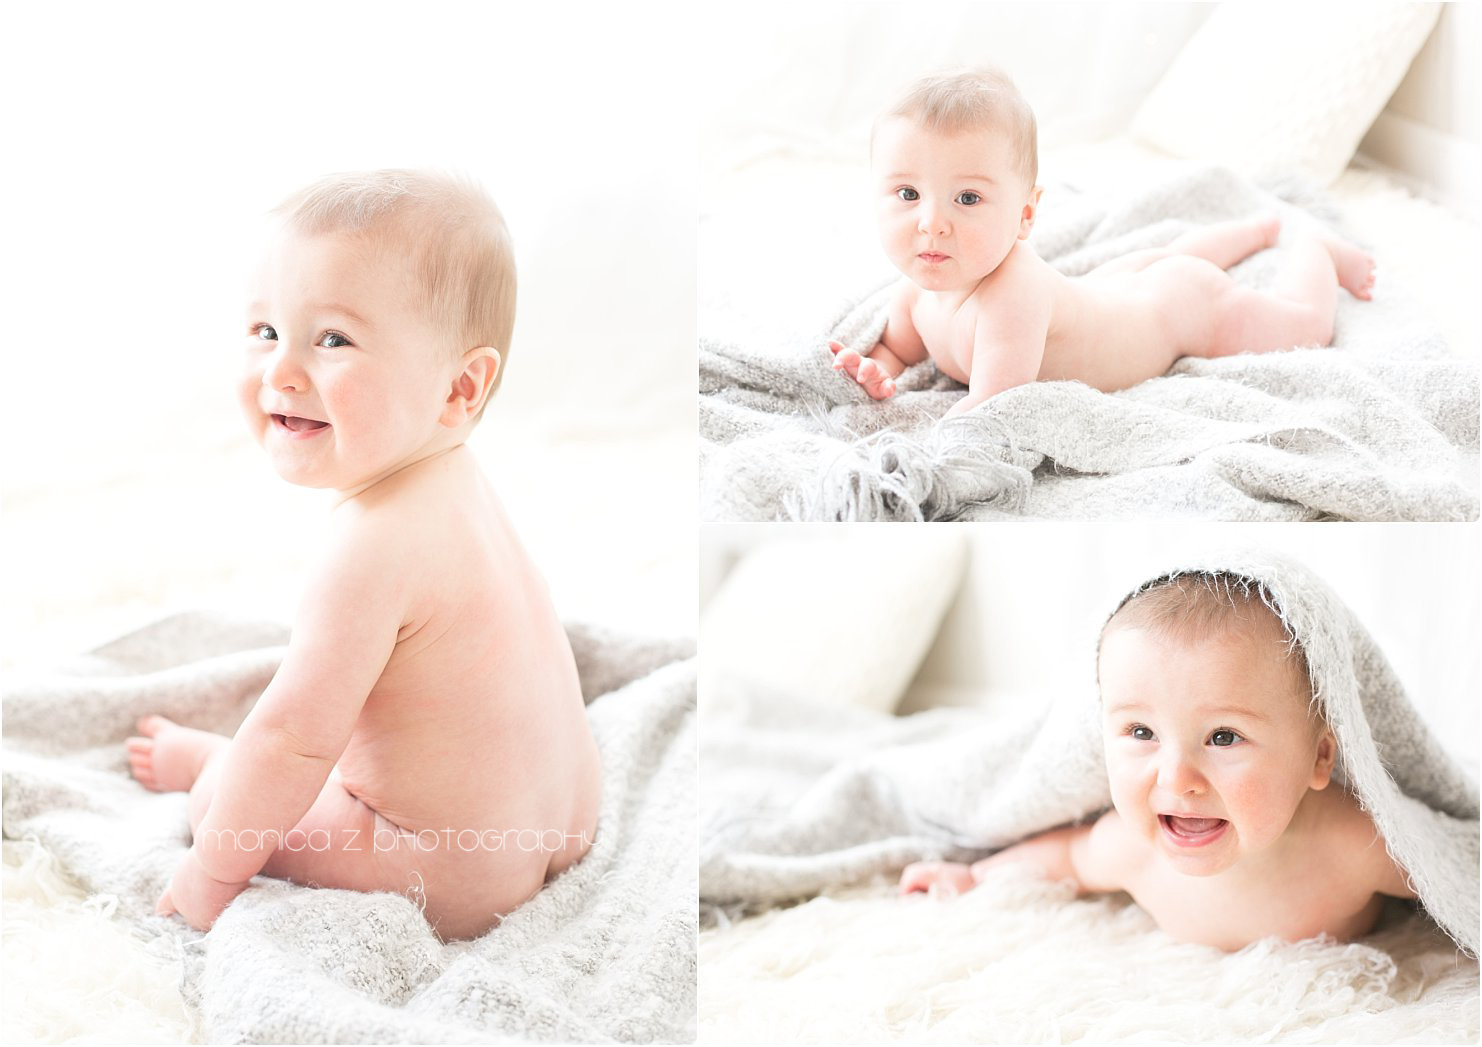 Ziggy | 6 months | Babies first year | Studio – Uptown Portraiture Collective | Northwest Indiana Baby Photographer